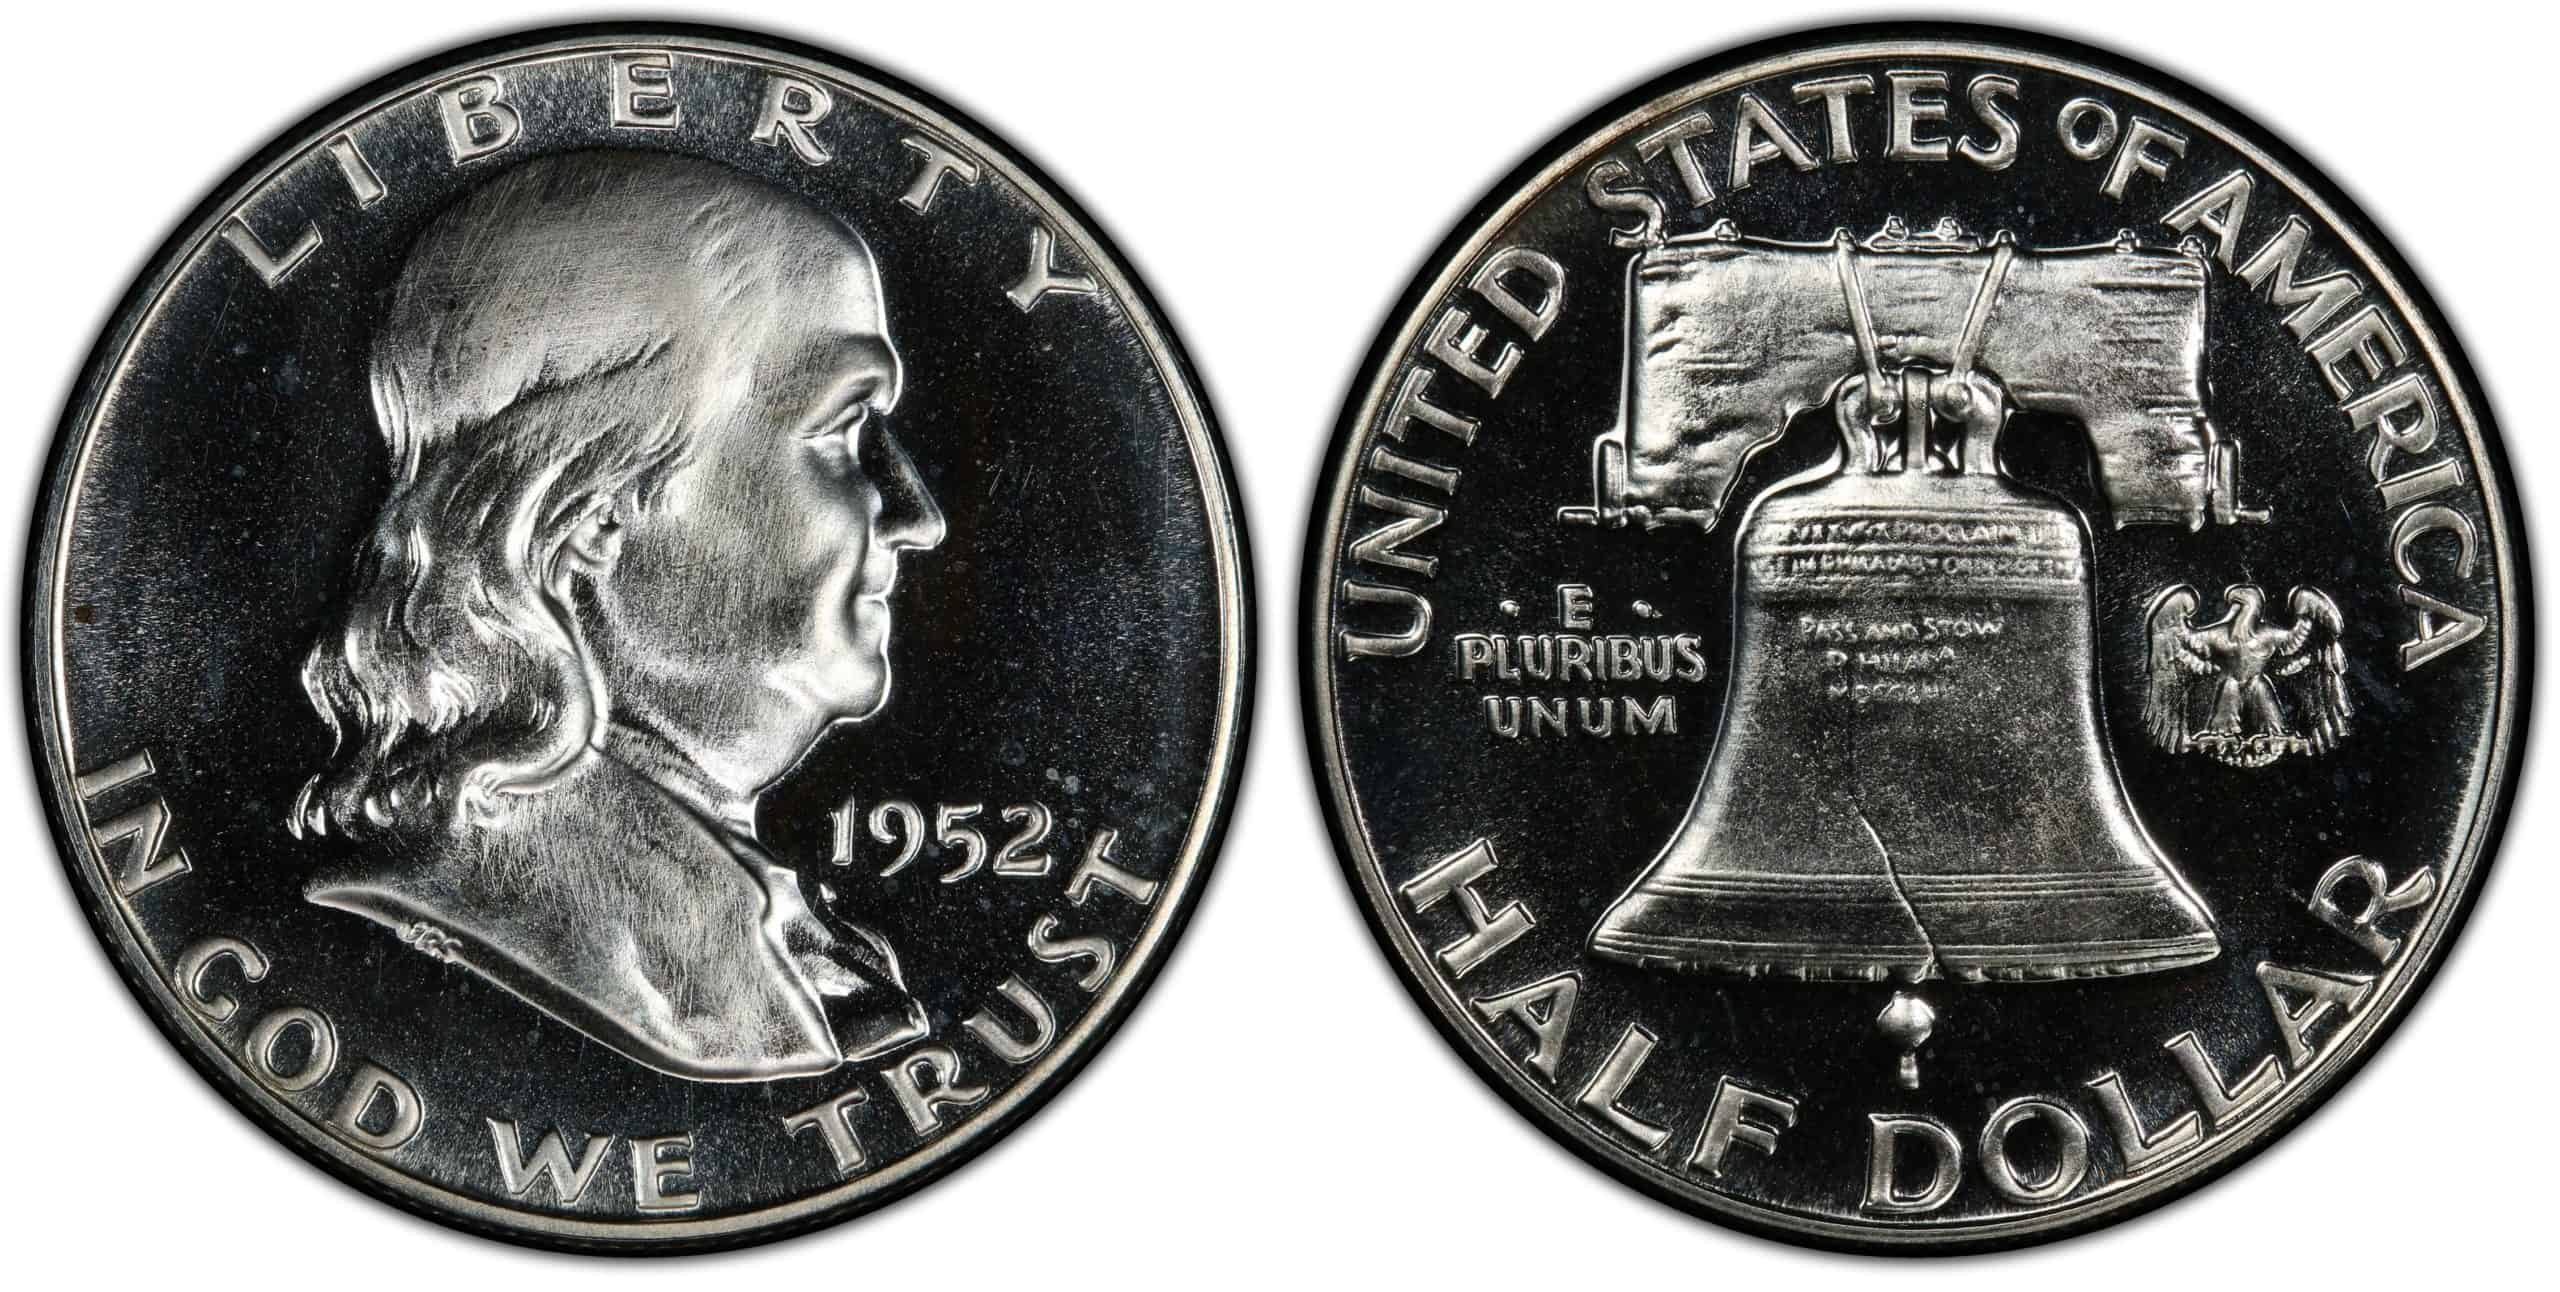 1952 proof Franklin half dollar